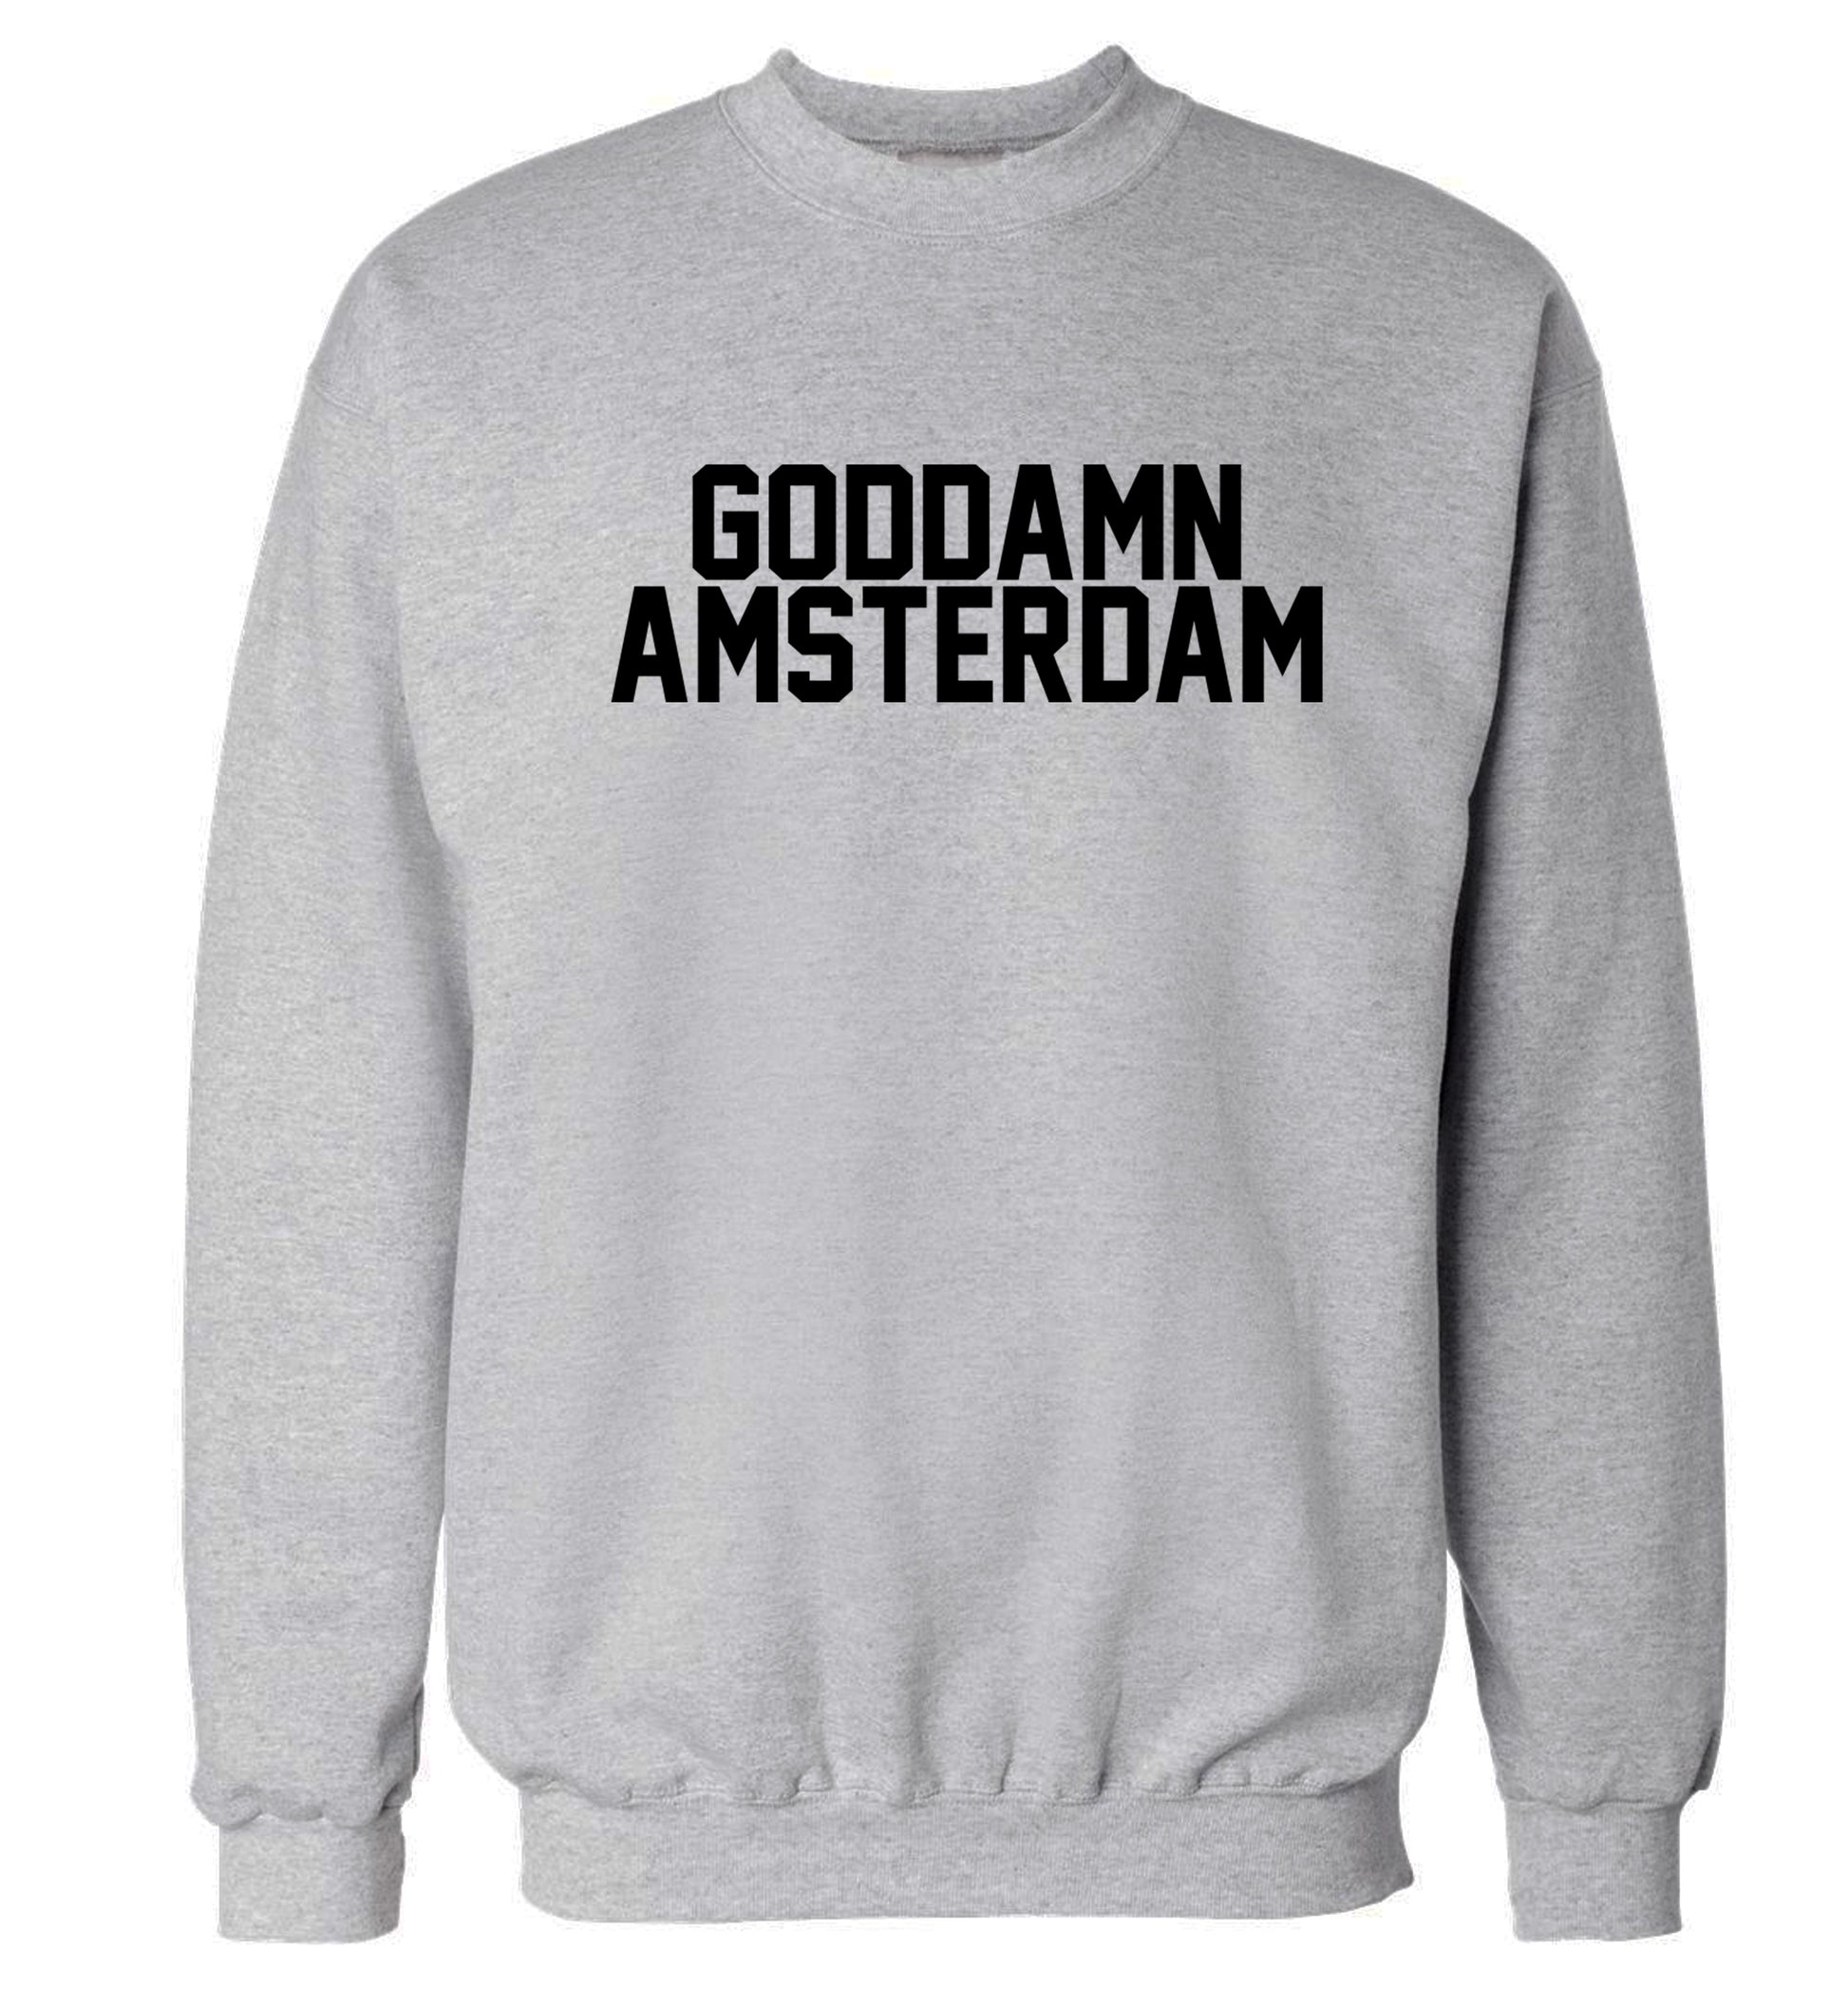 Goddamn Amsterdam Adult's unisex grey Sweater 2XL